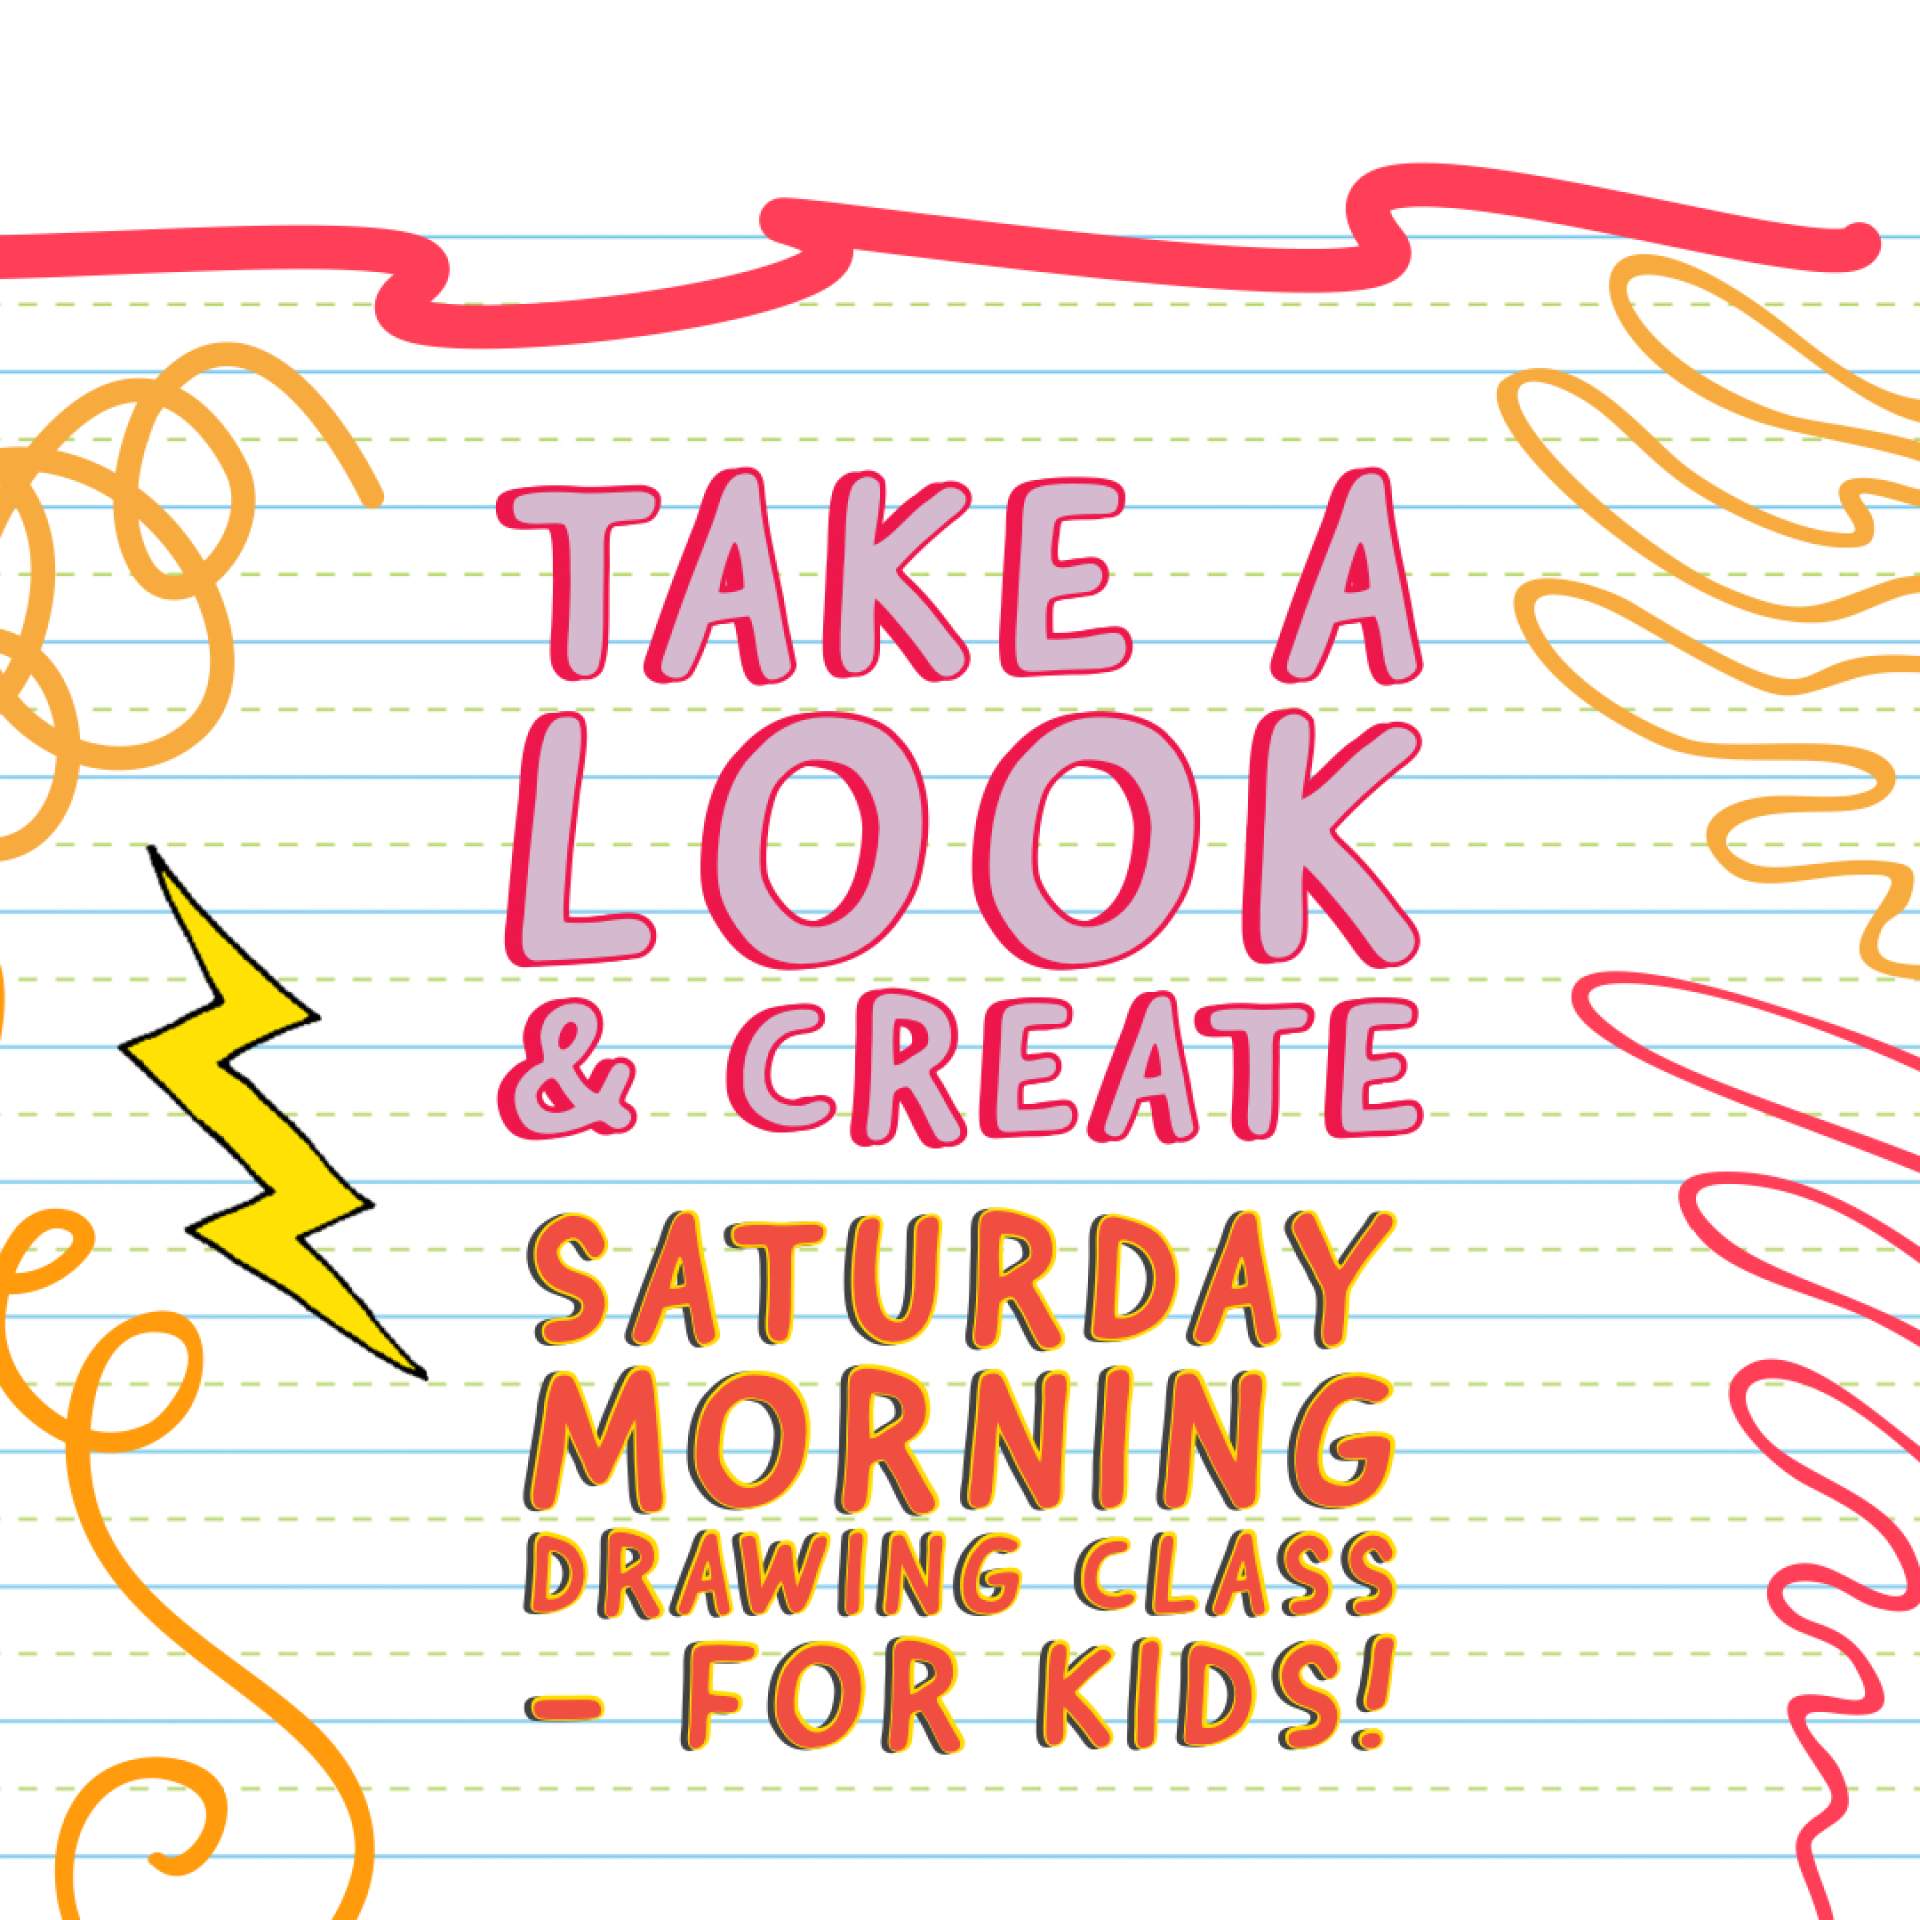 Take a Look & Create! Saturday's